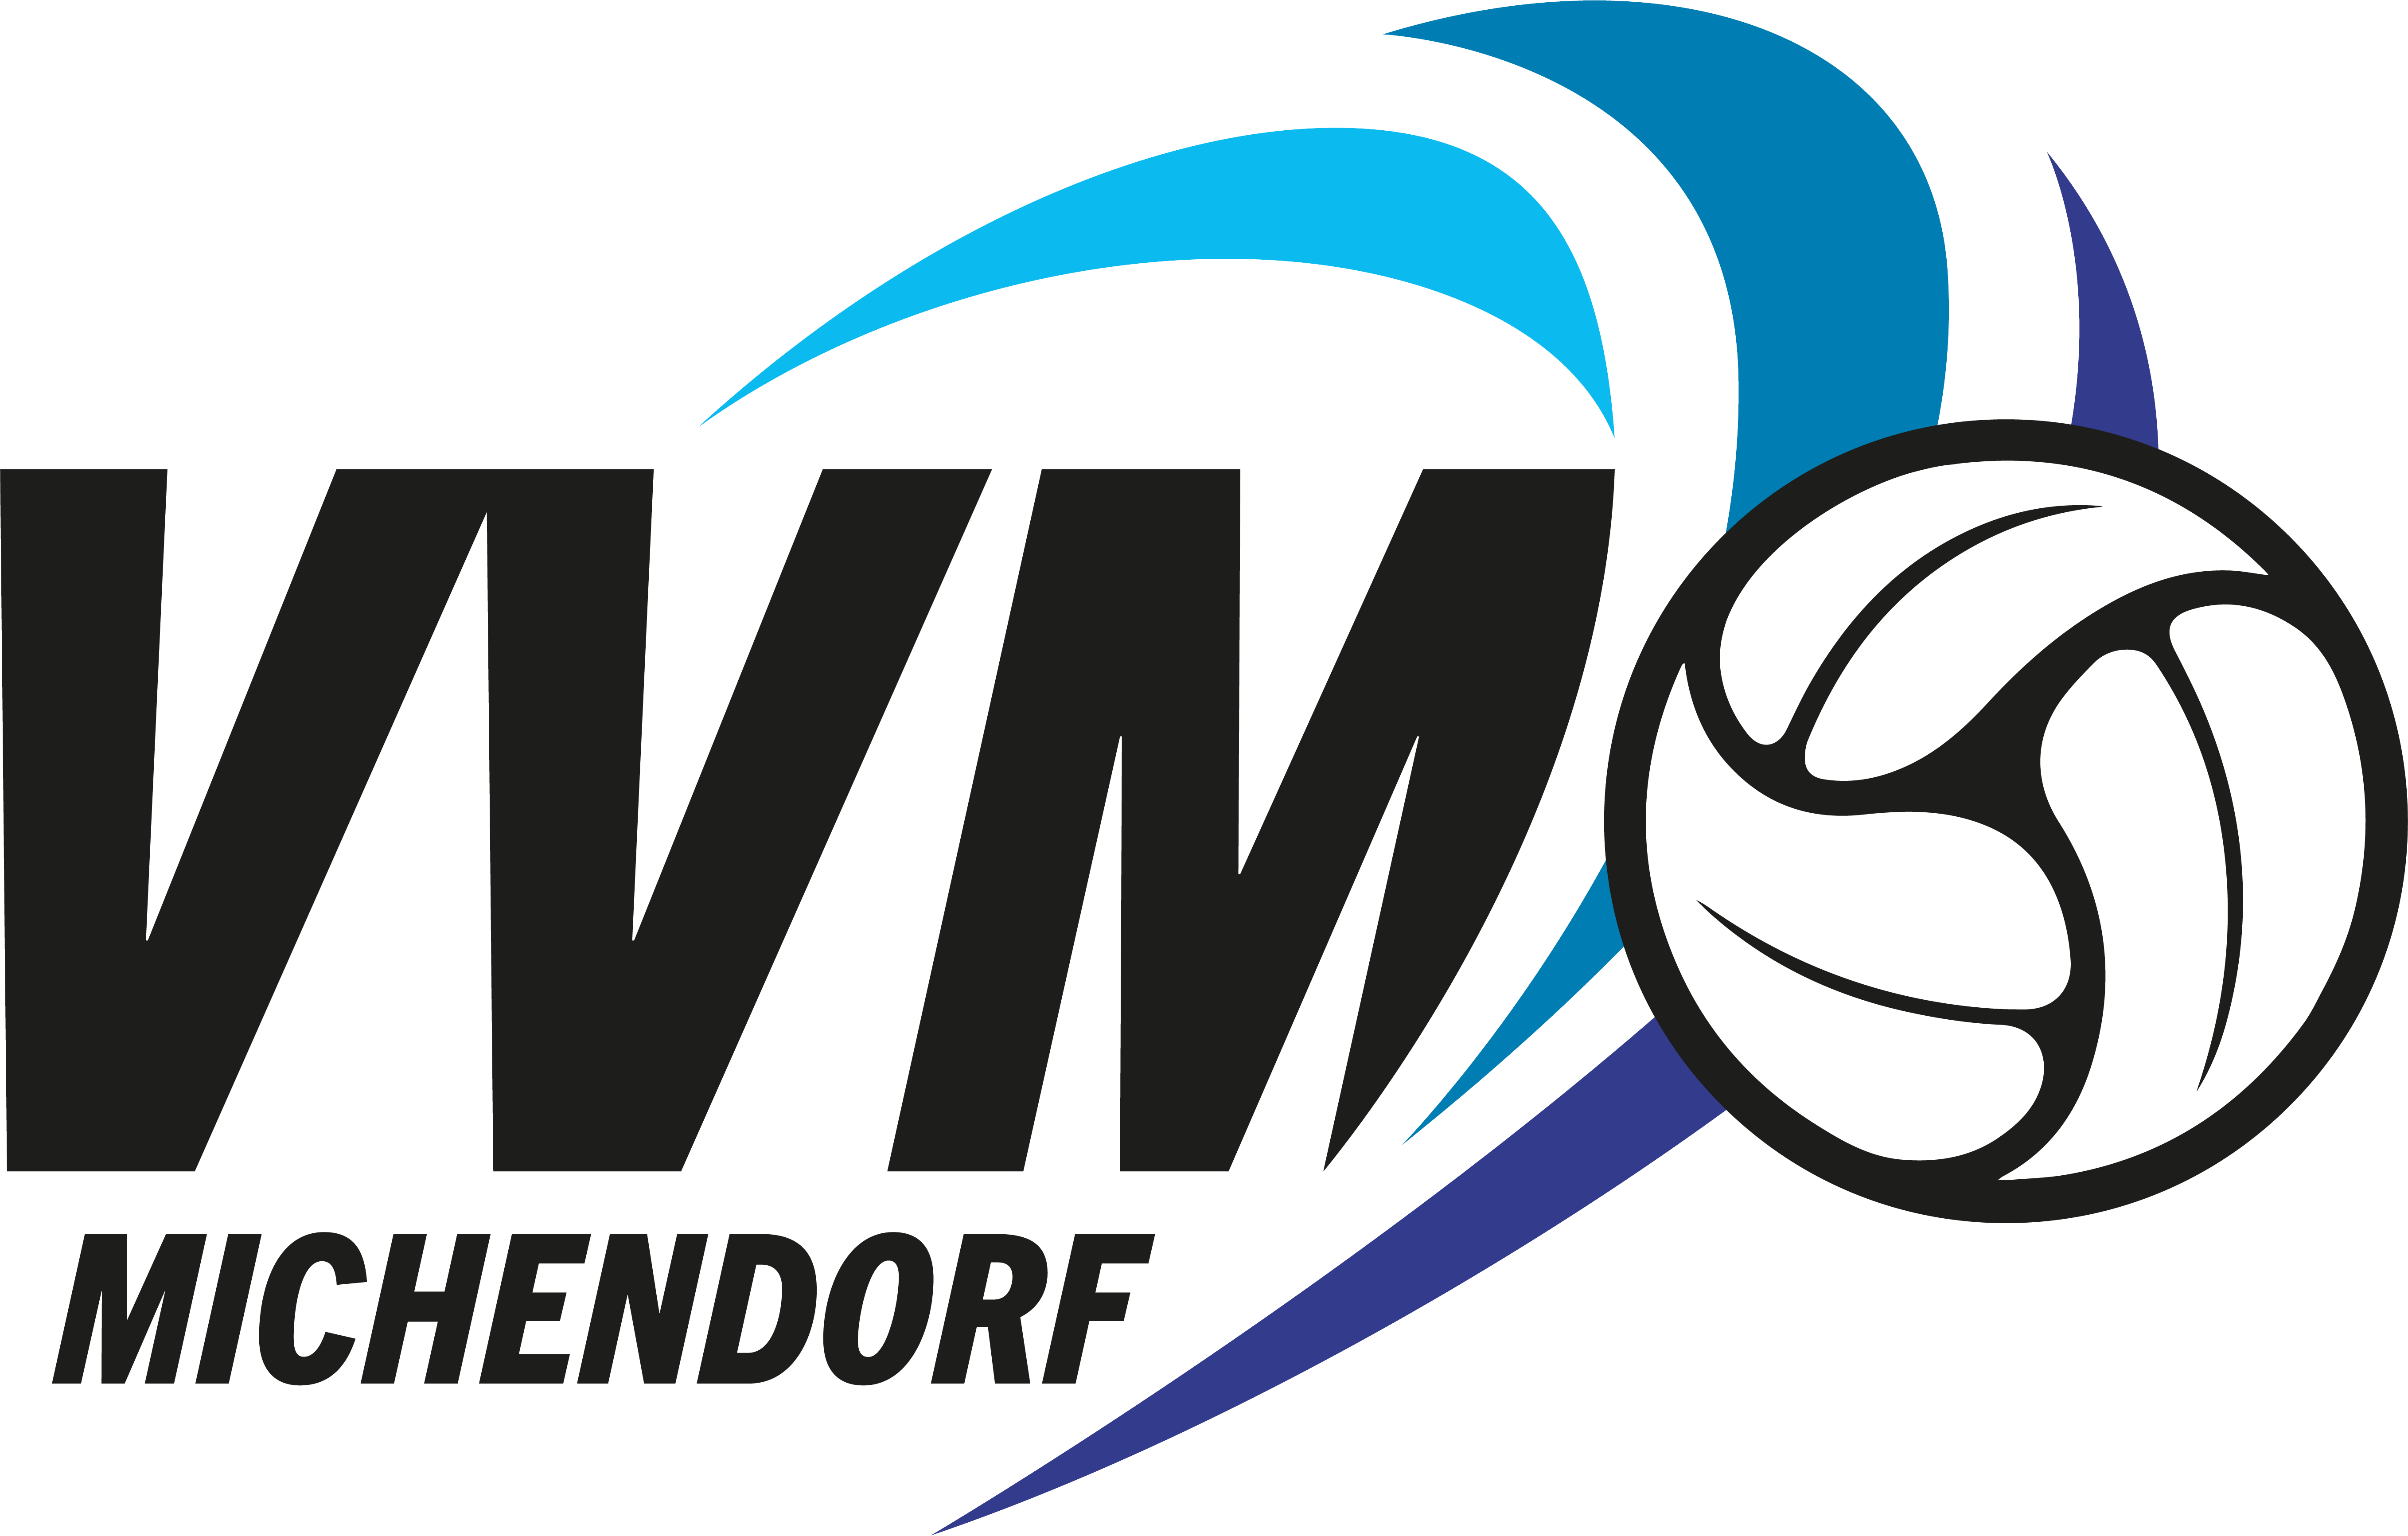 Volleyballverein Michendorf e.V.